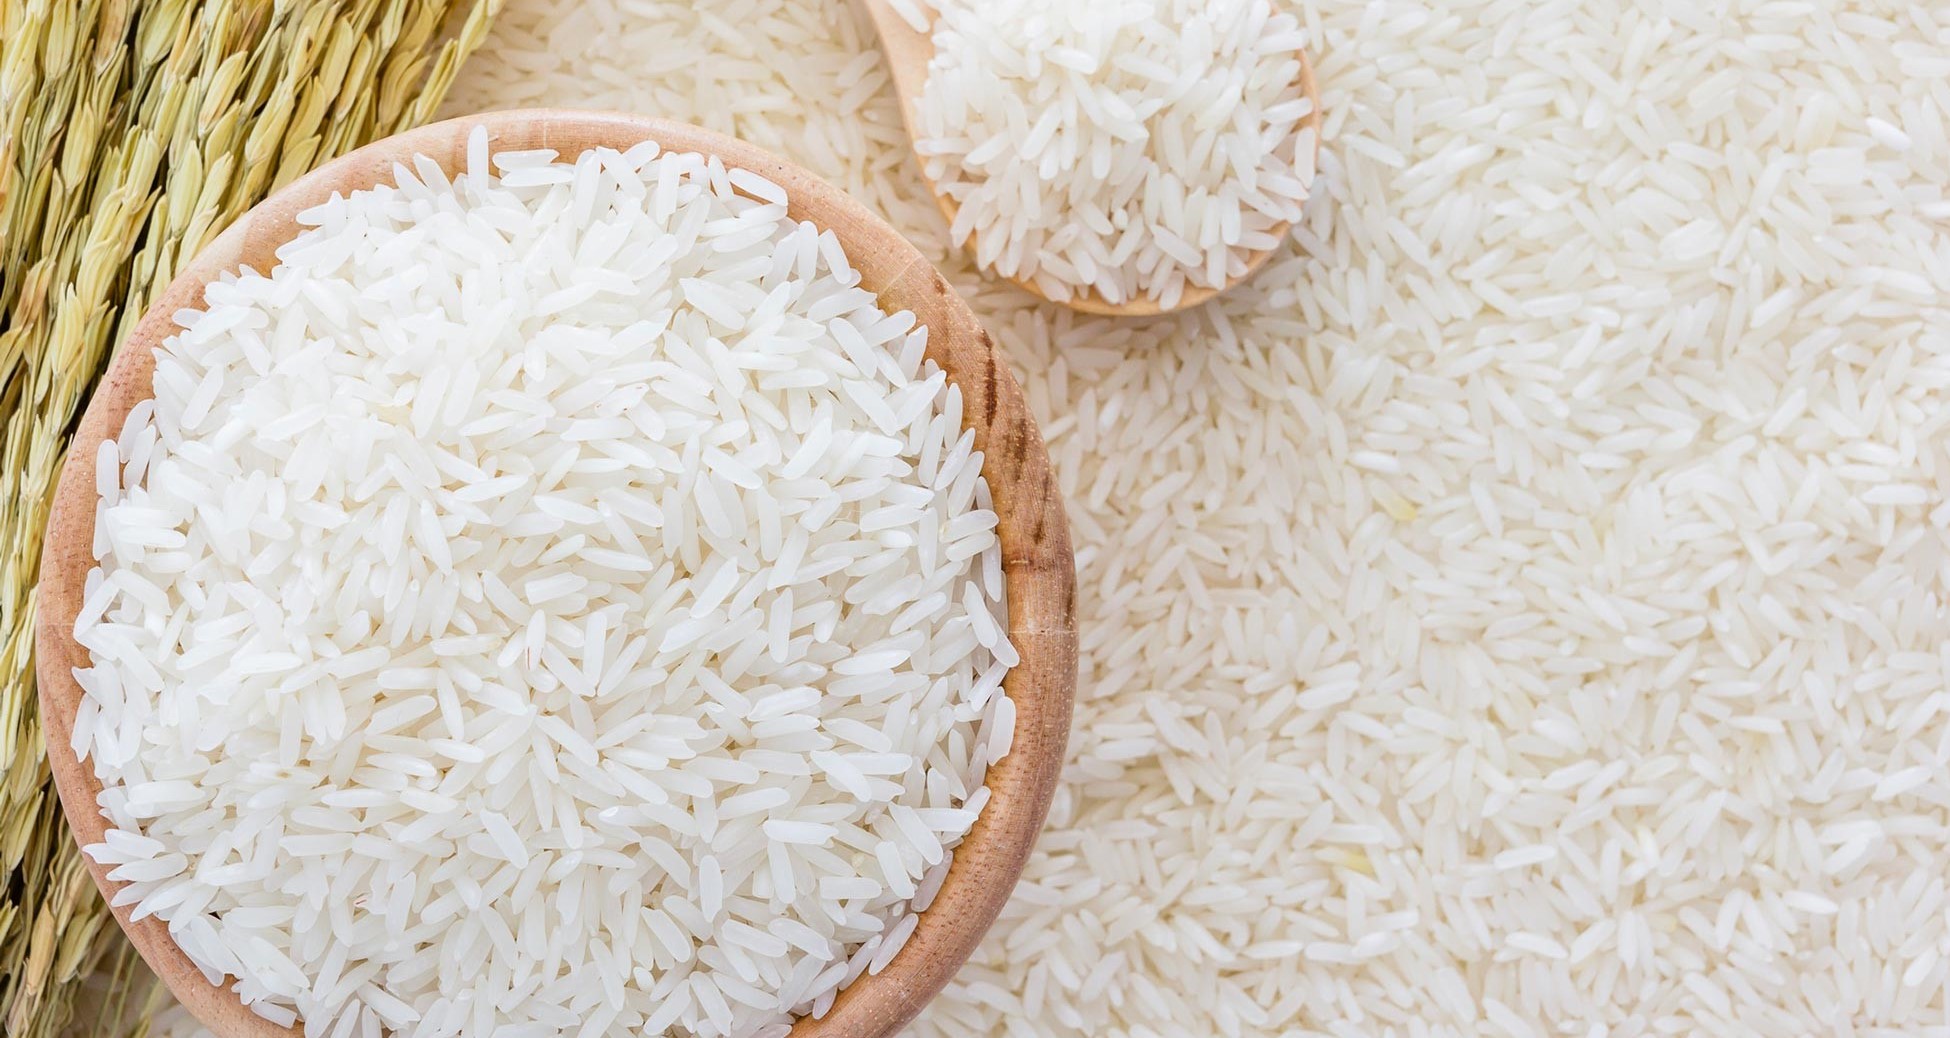 Suha riža u snu